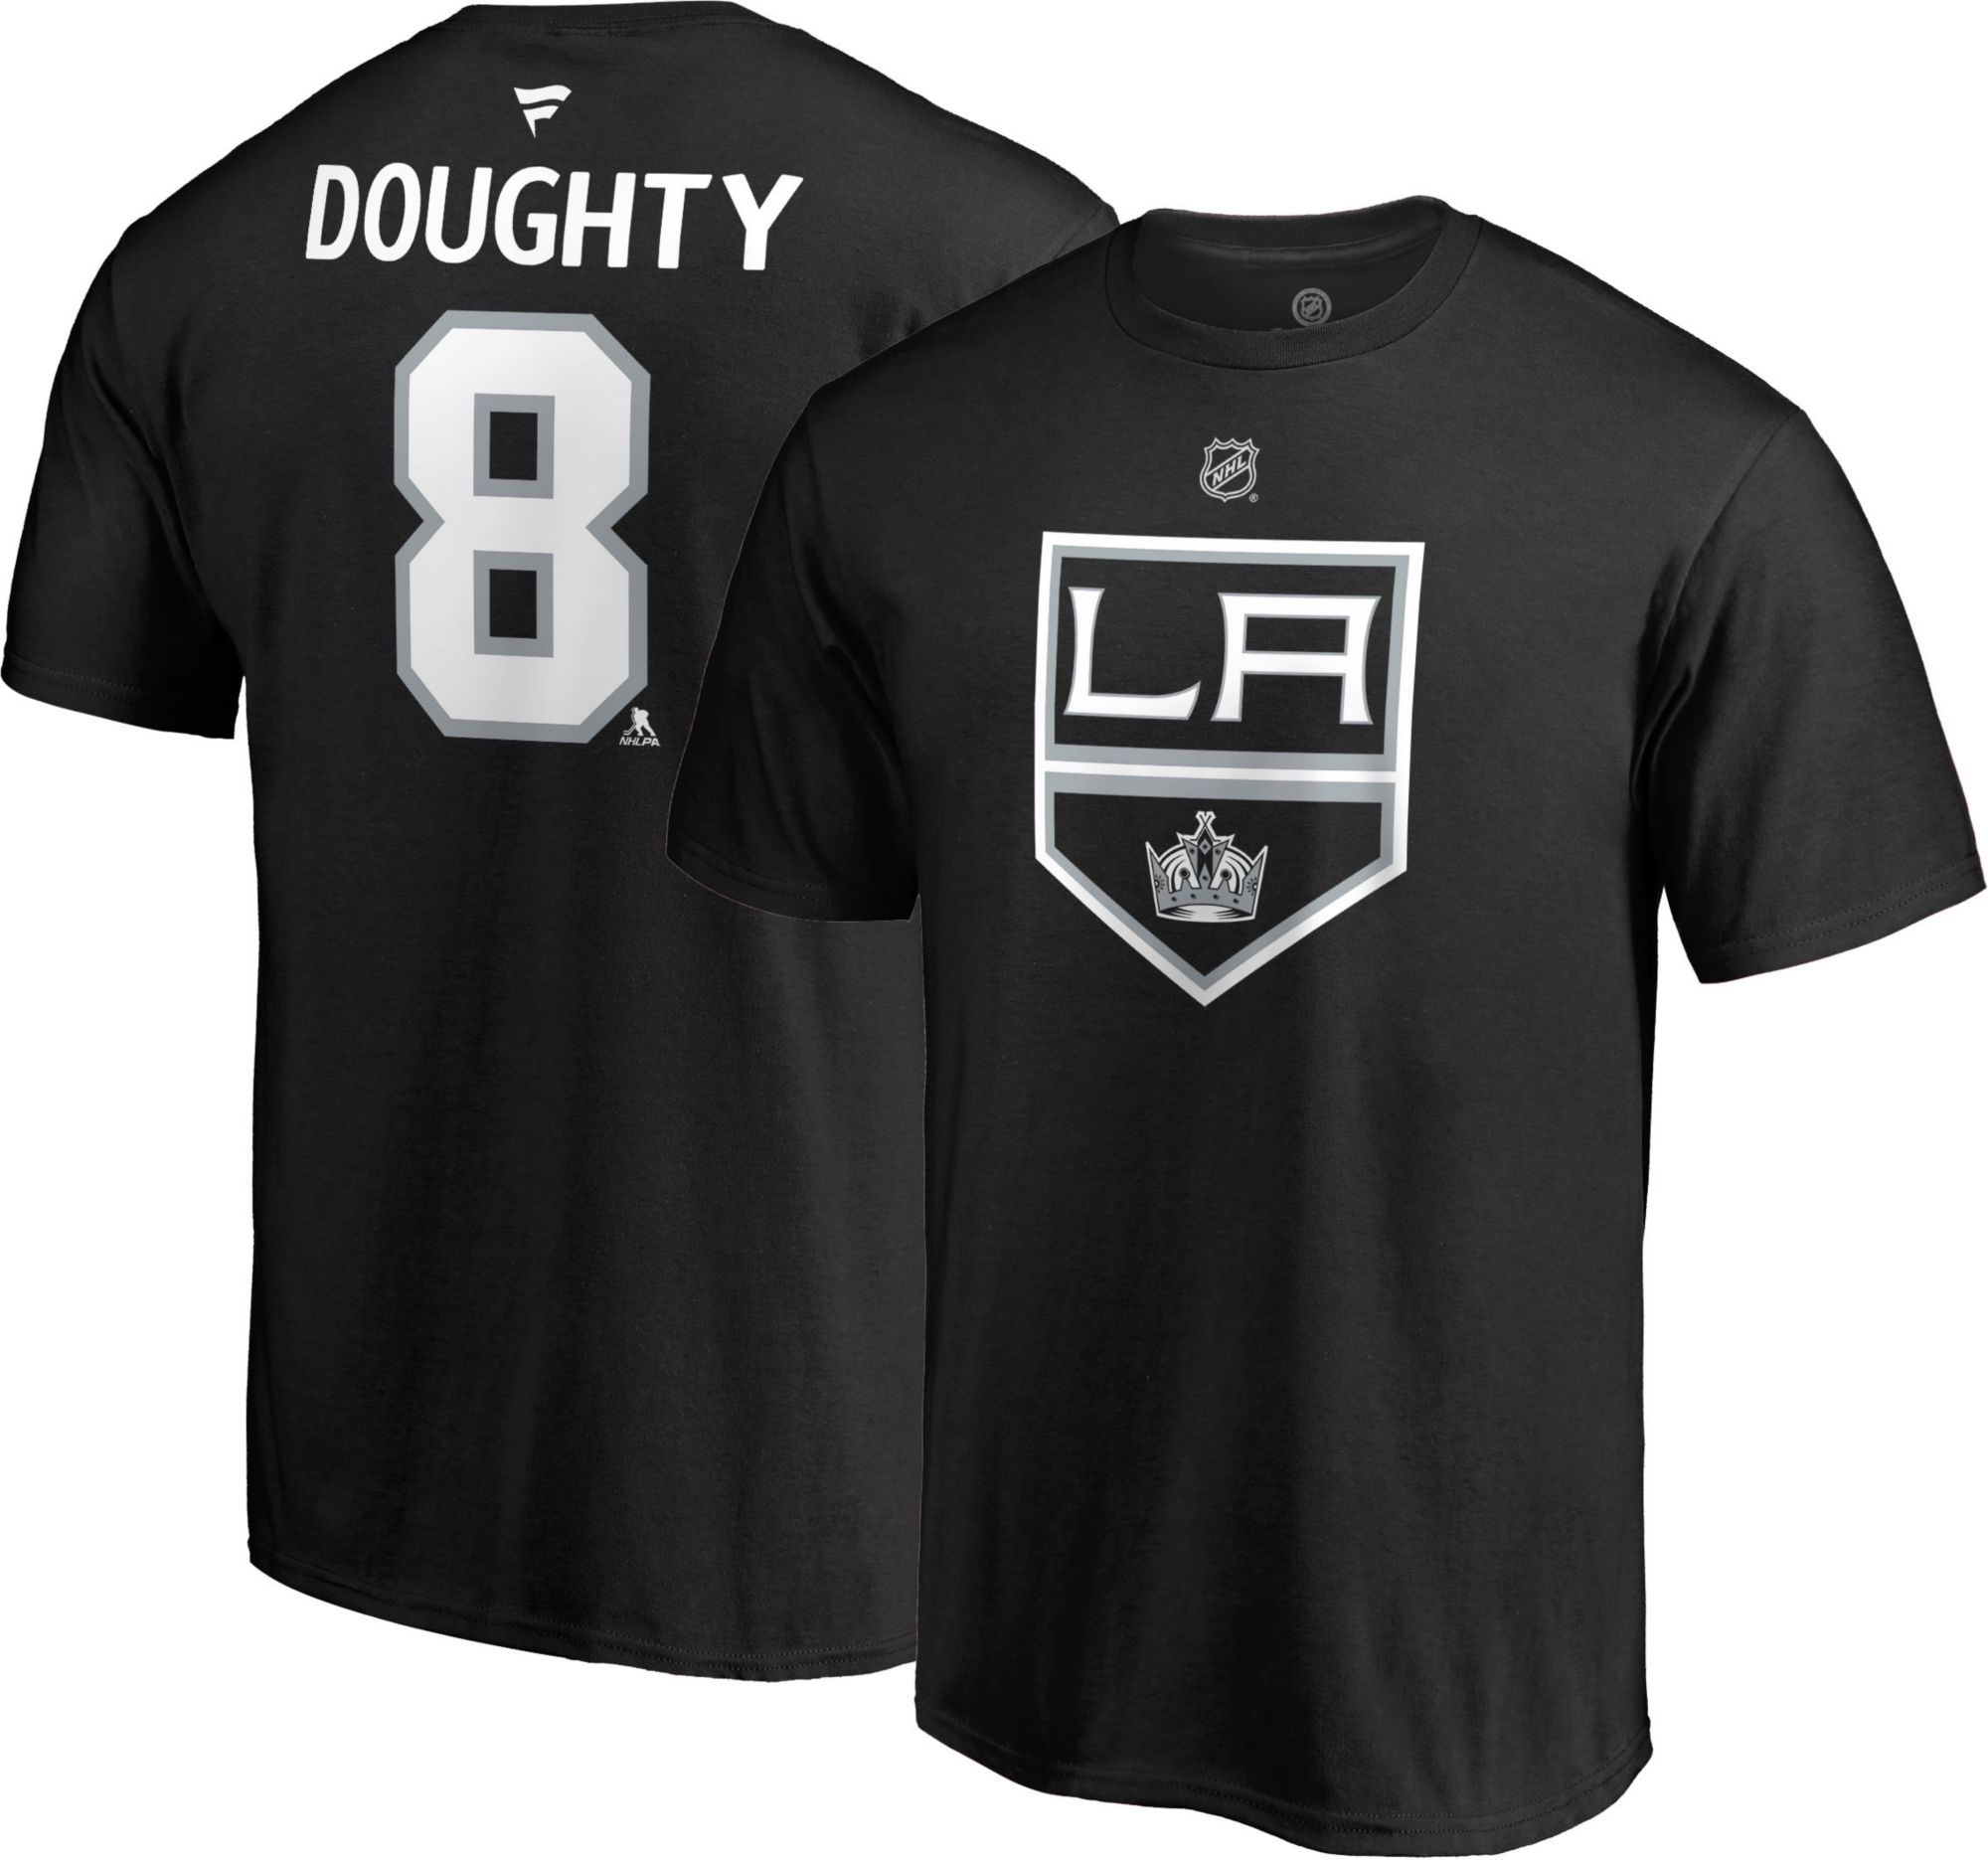 Drew Doughty #8 Black Player T-Shirt 